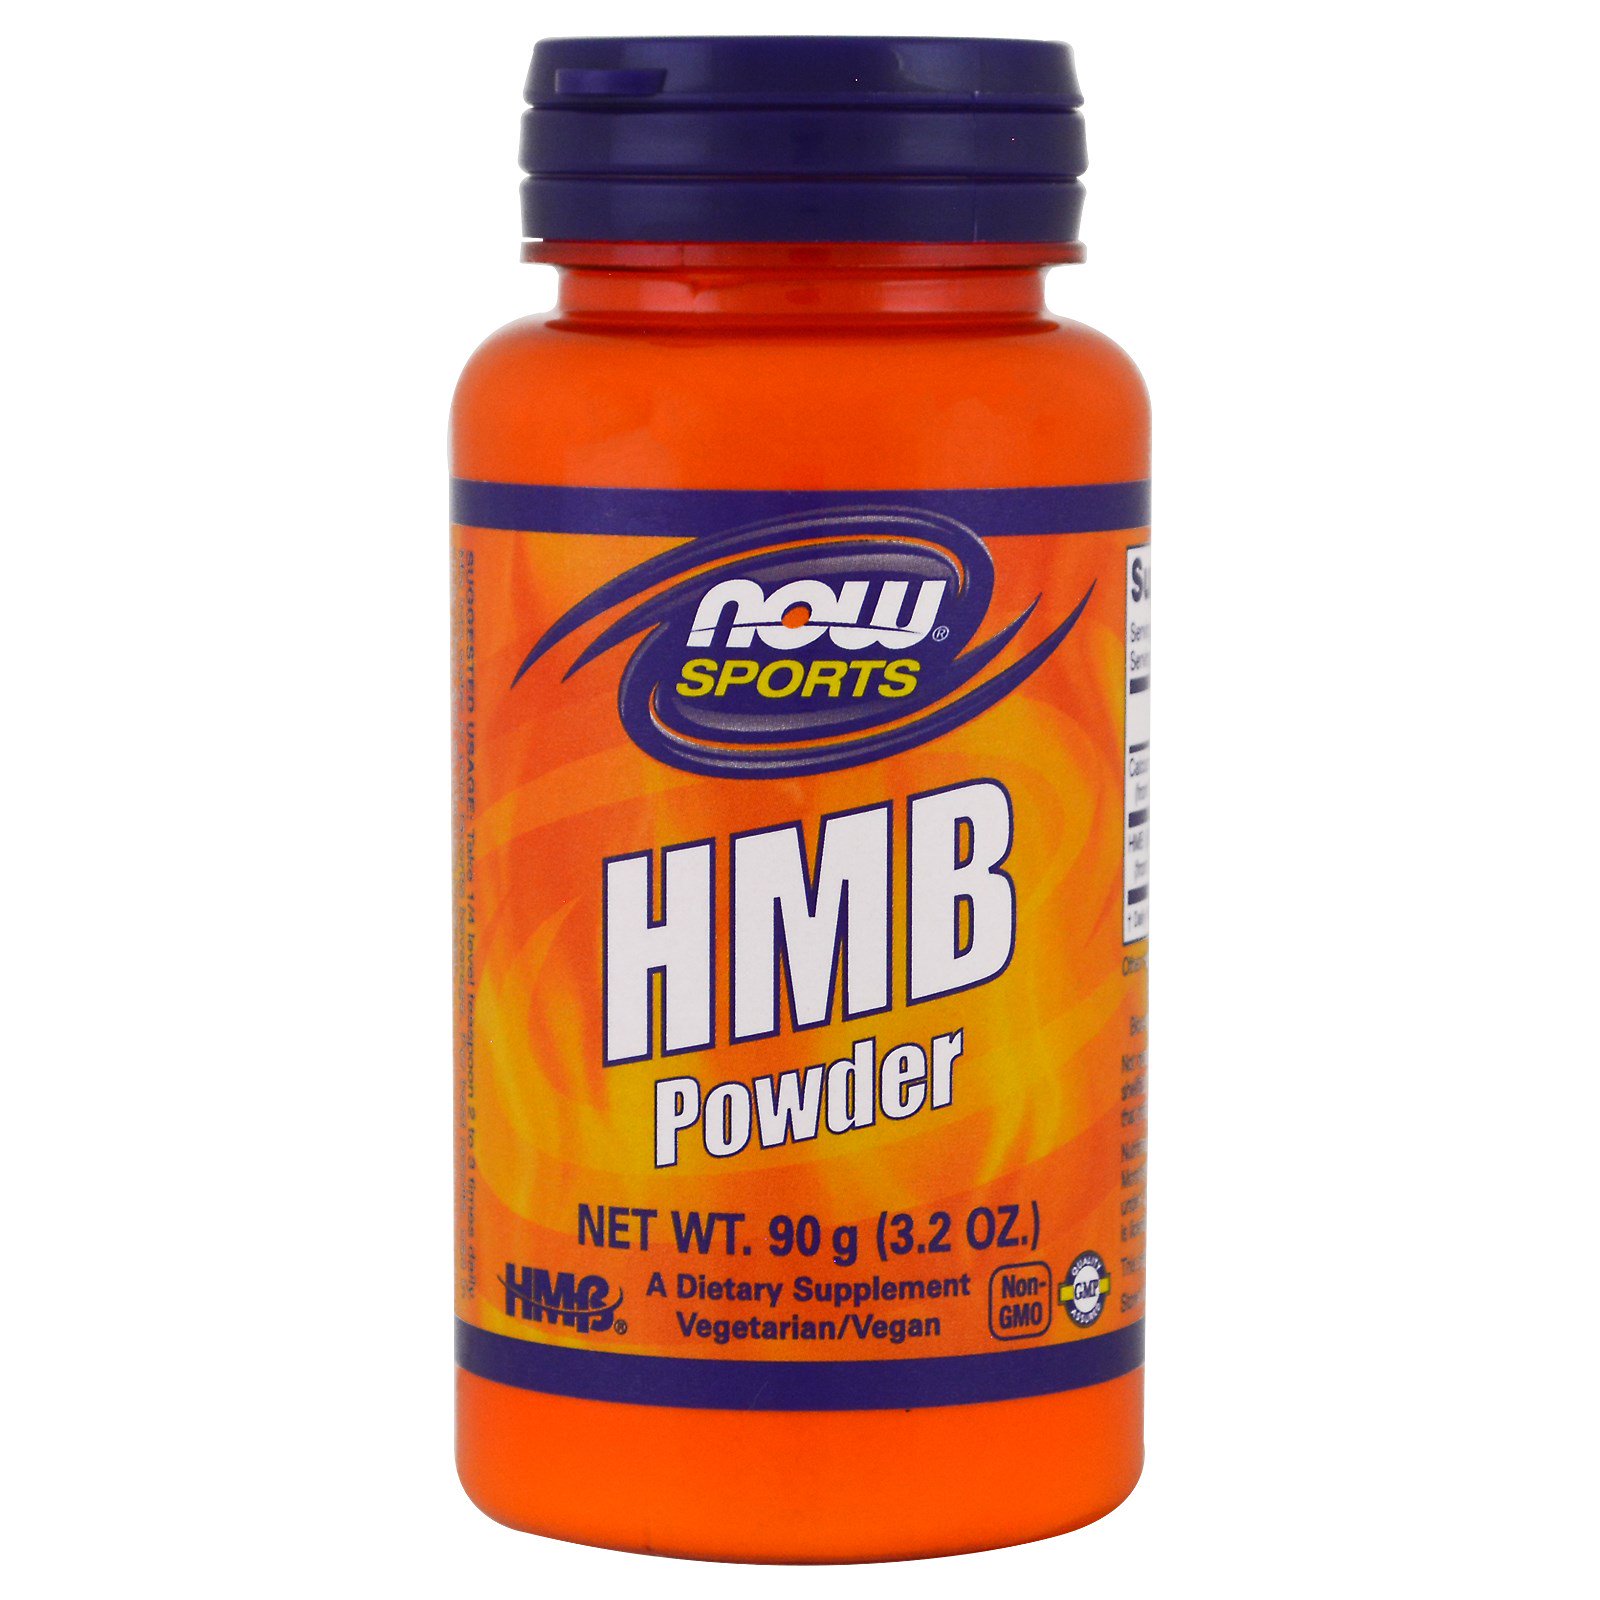 Hmb: гидроксиметилбутират в спортивном питании